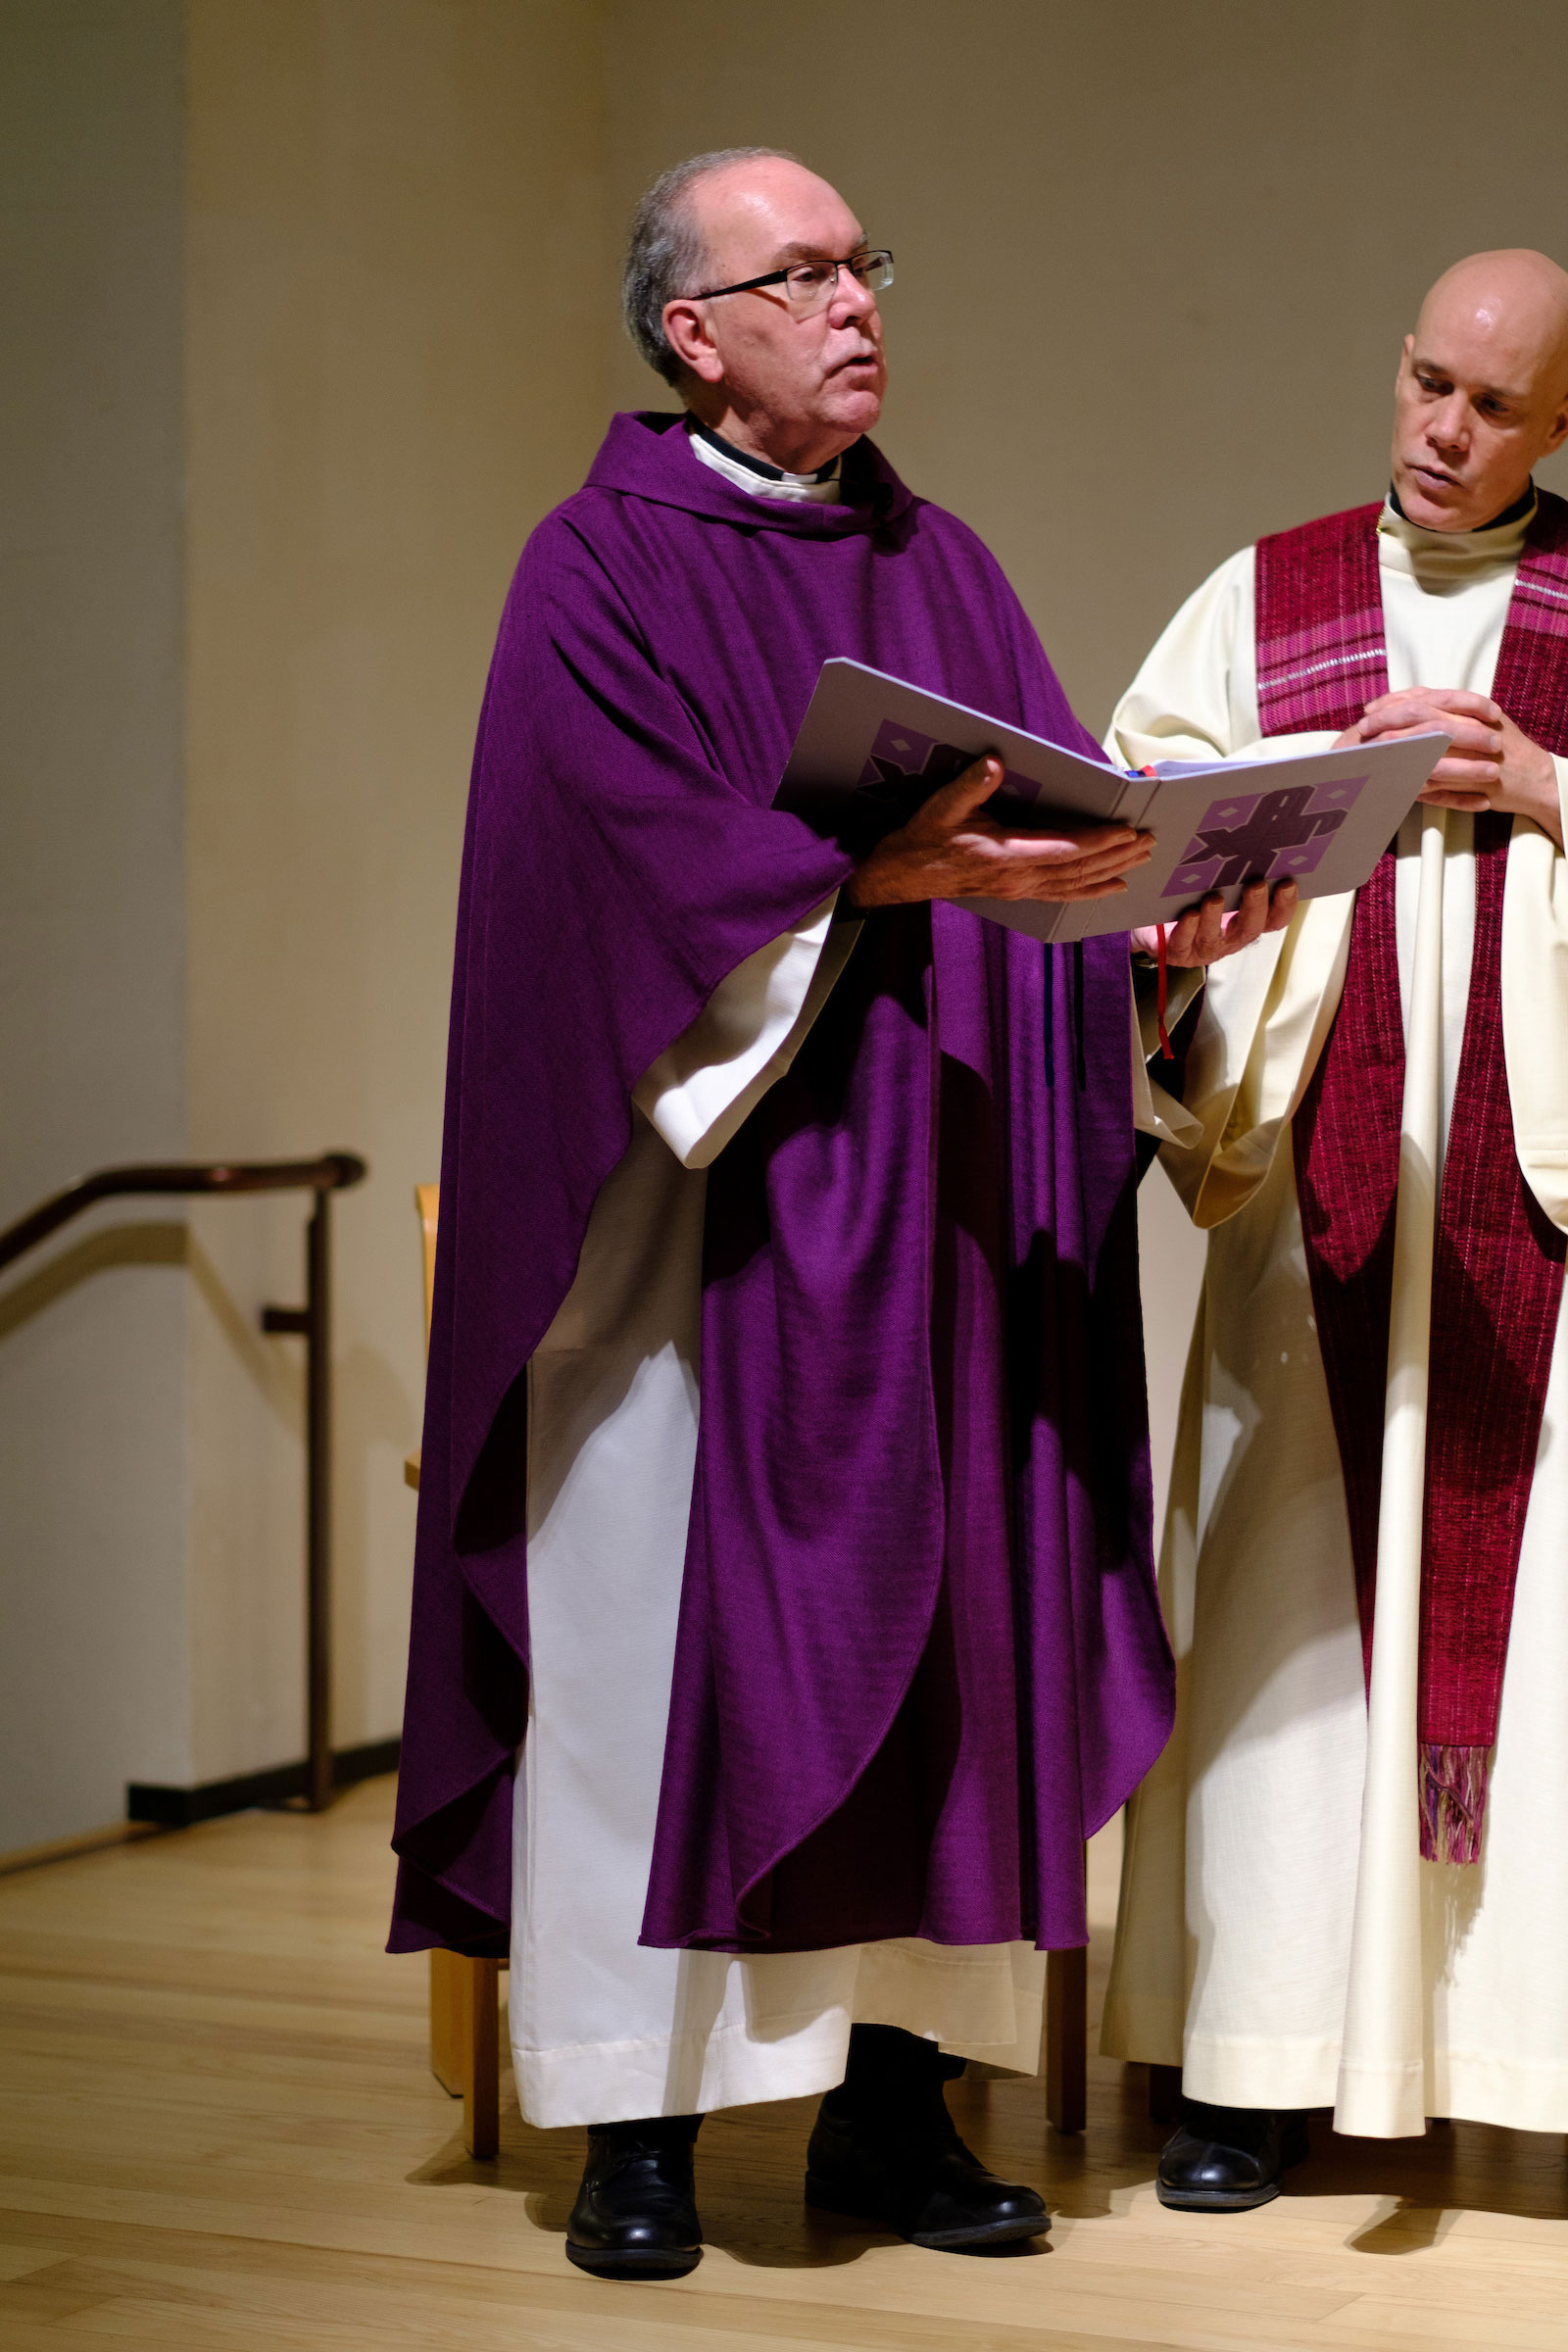 Fr. Steve Sundborg in his violet liturgical robes at the Advent Mass